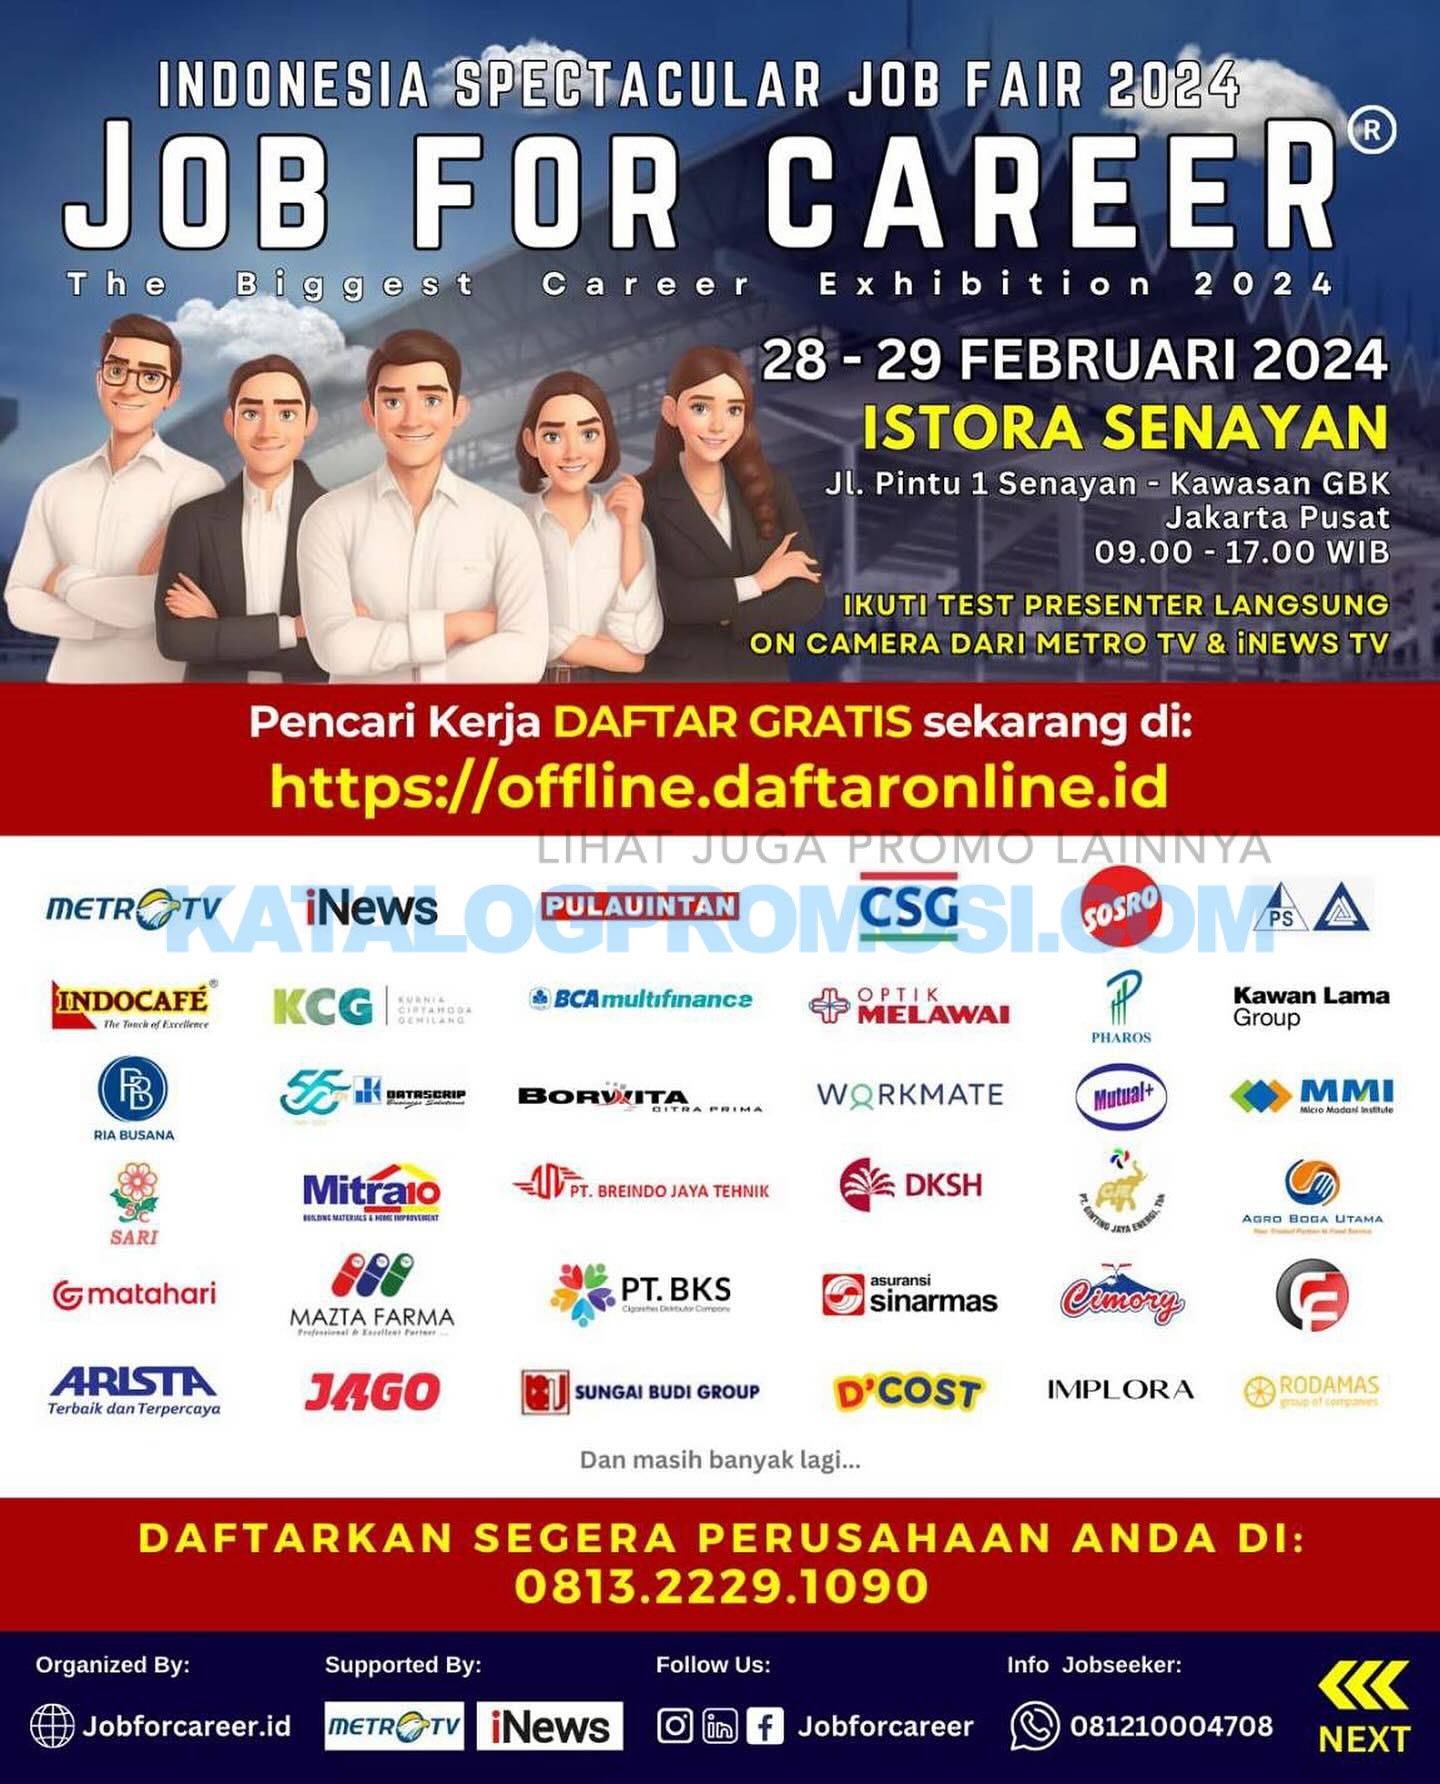 INDONESIA SPECTACULAR JOB FAIR 2024 - JOB FOR CAREER JAKARTA tanggal 28-29 Februari 2024